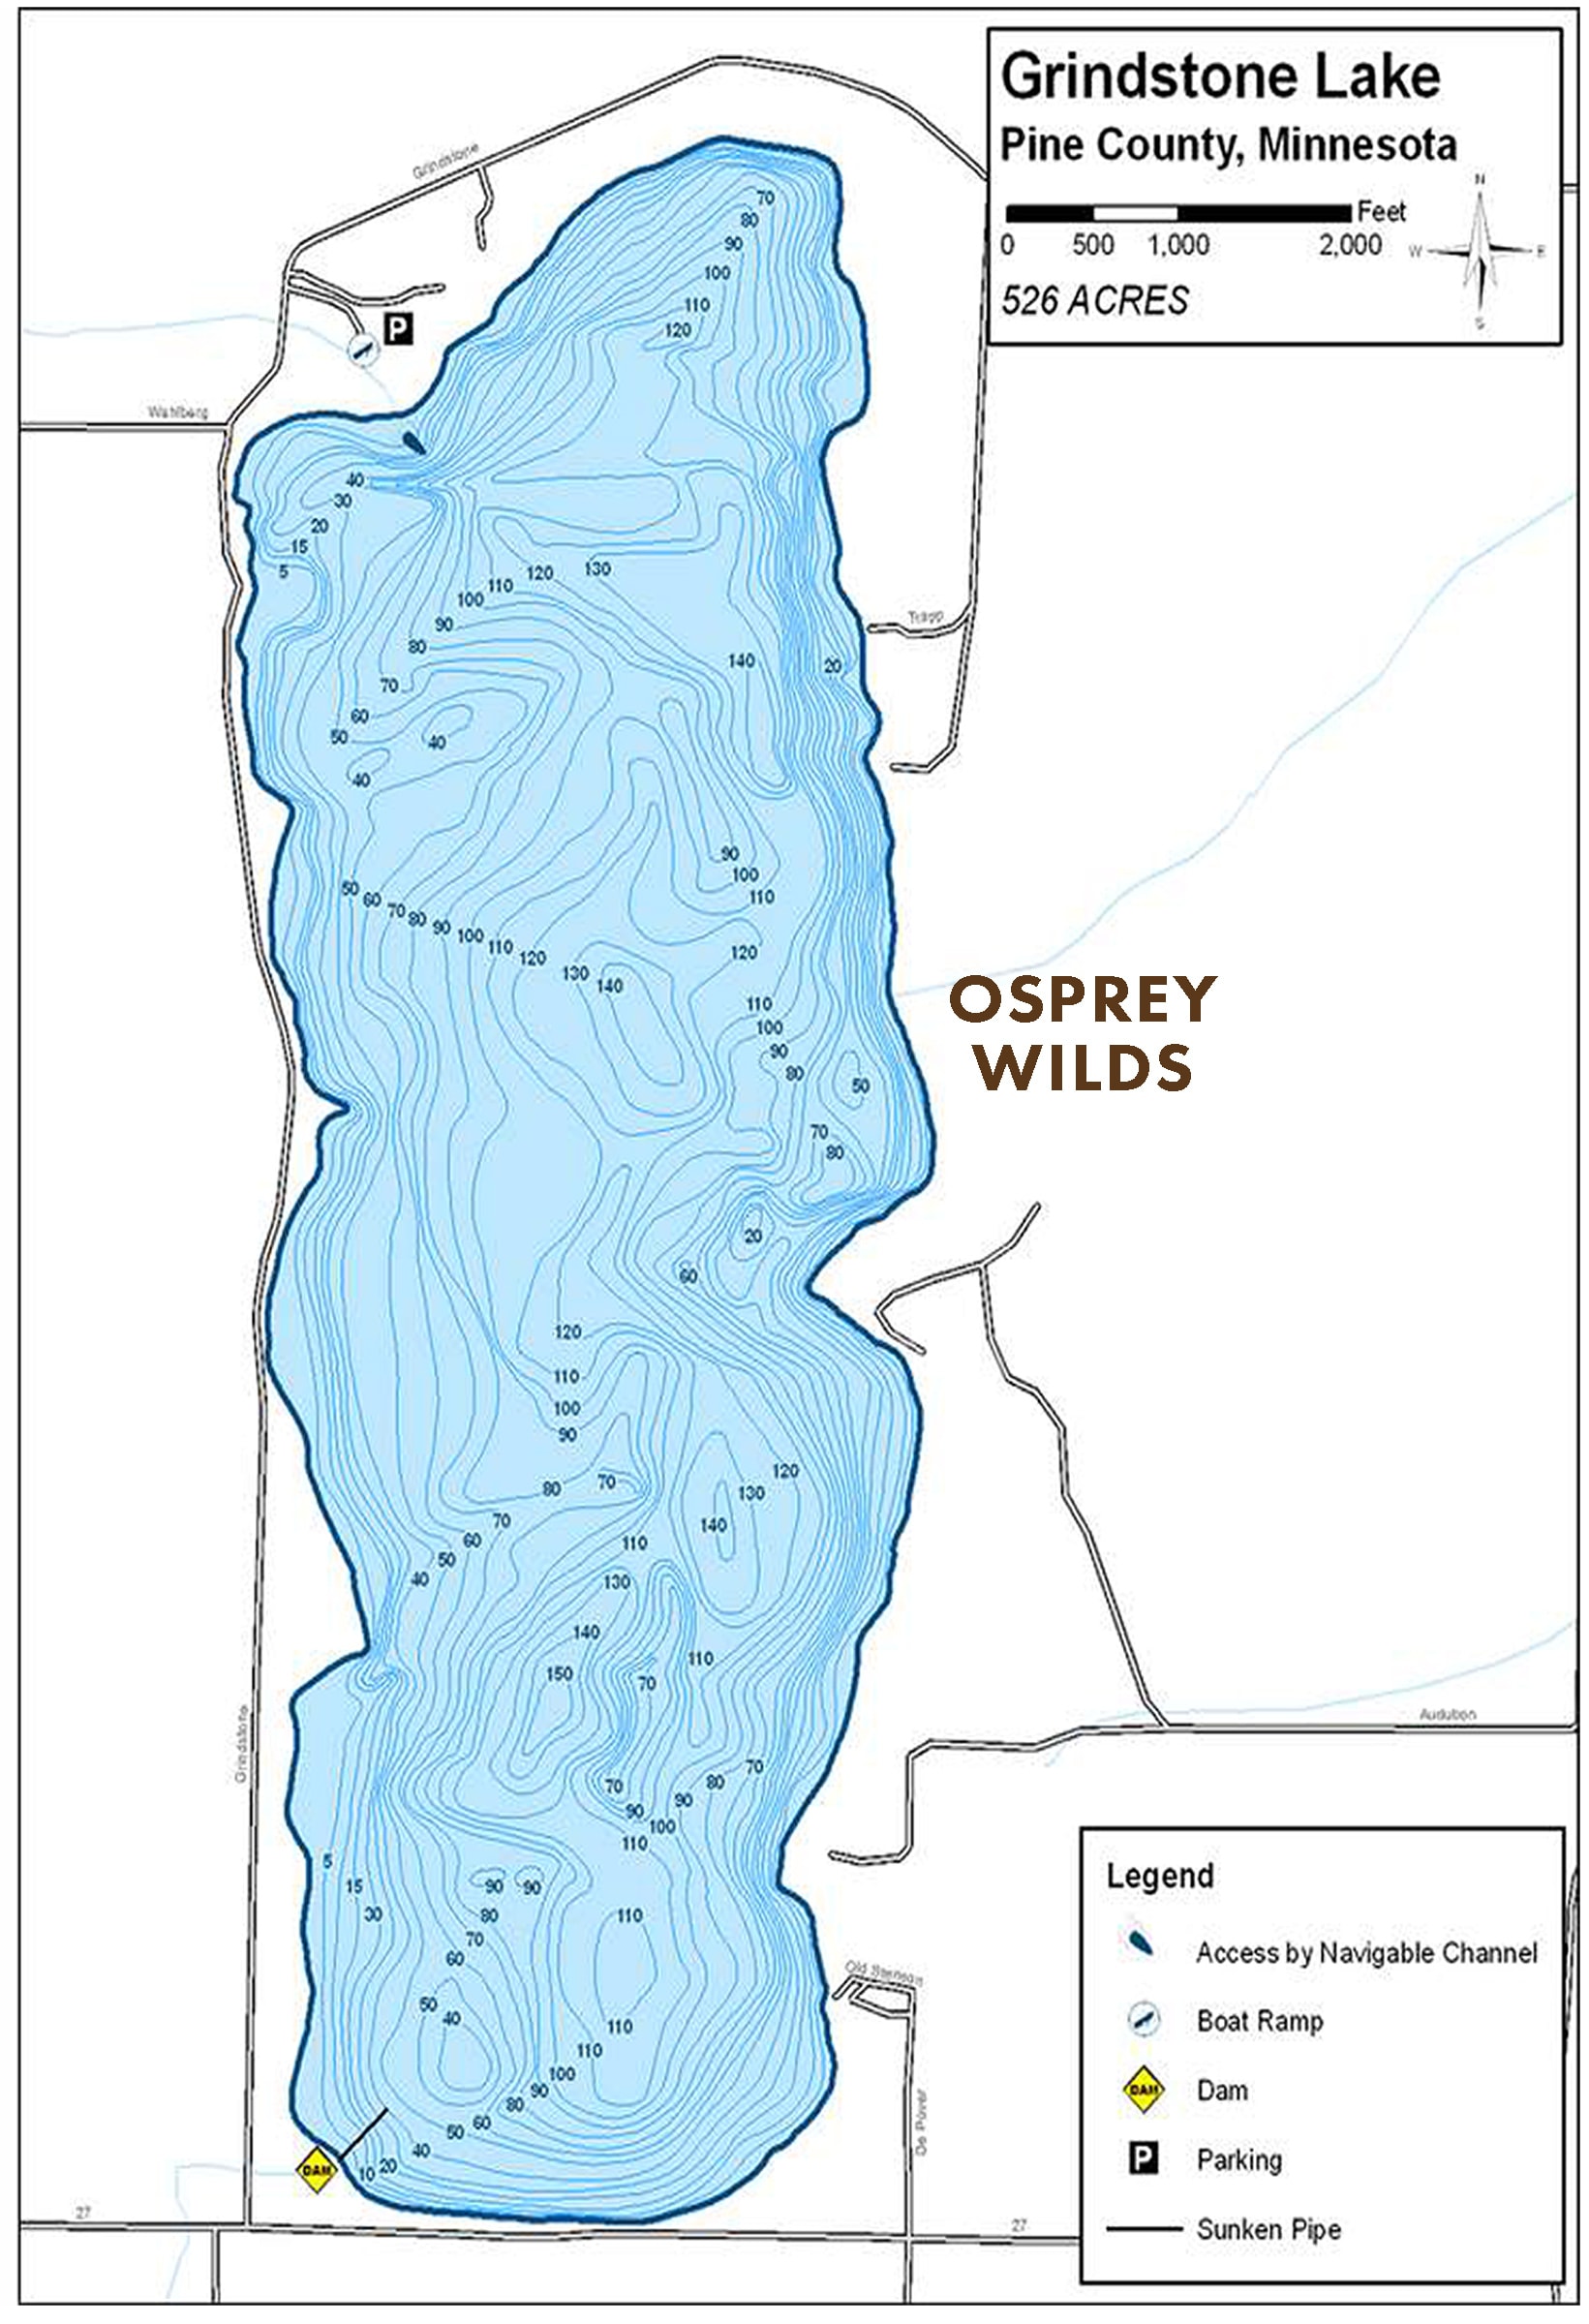 Osprey Wilds on Grindstone Lake by Sandstone, MN